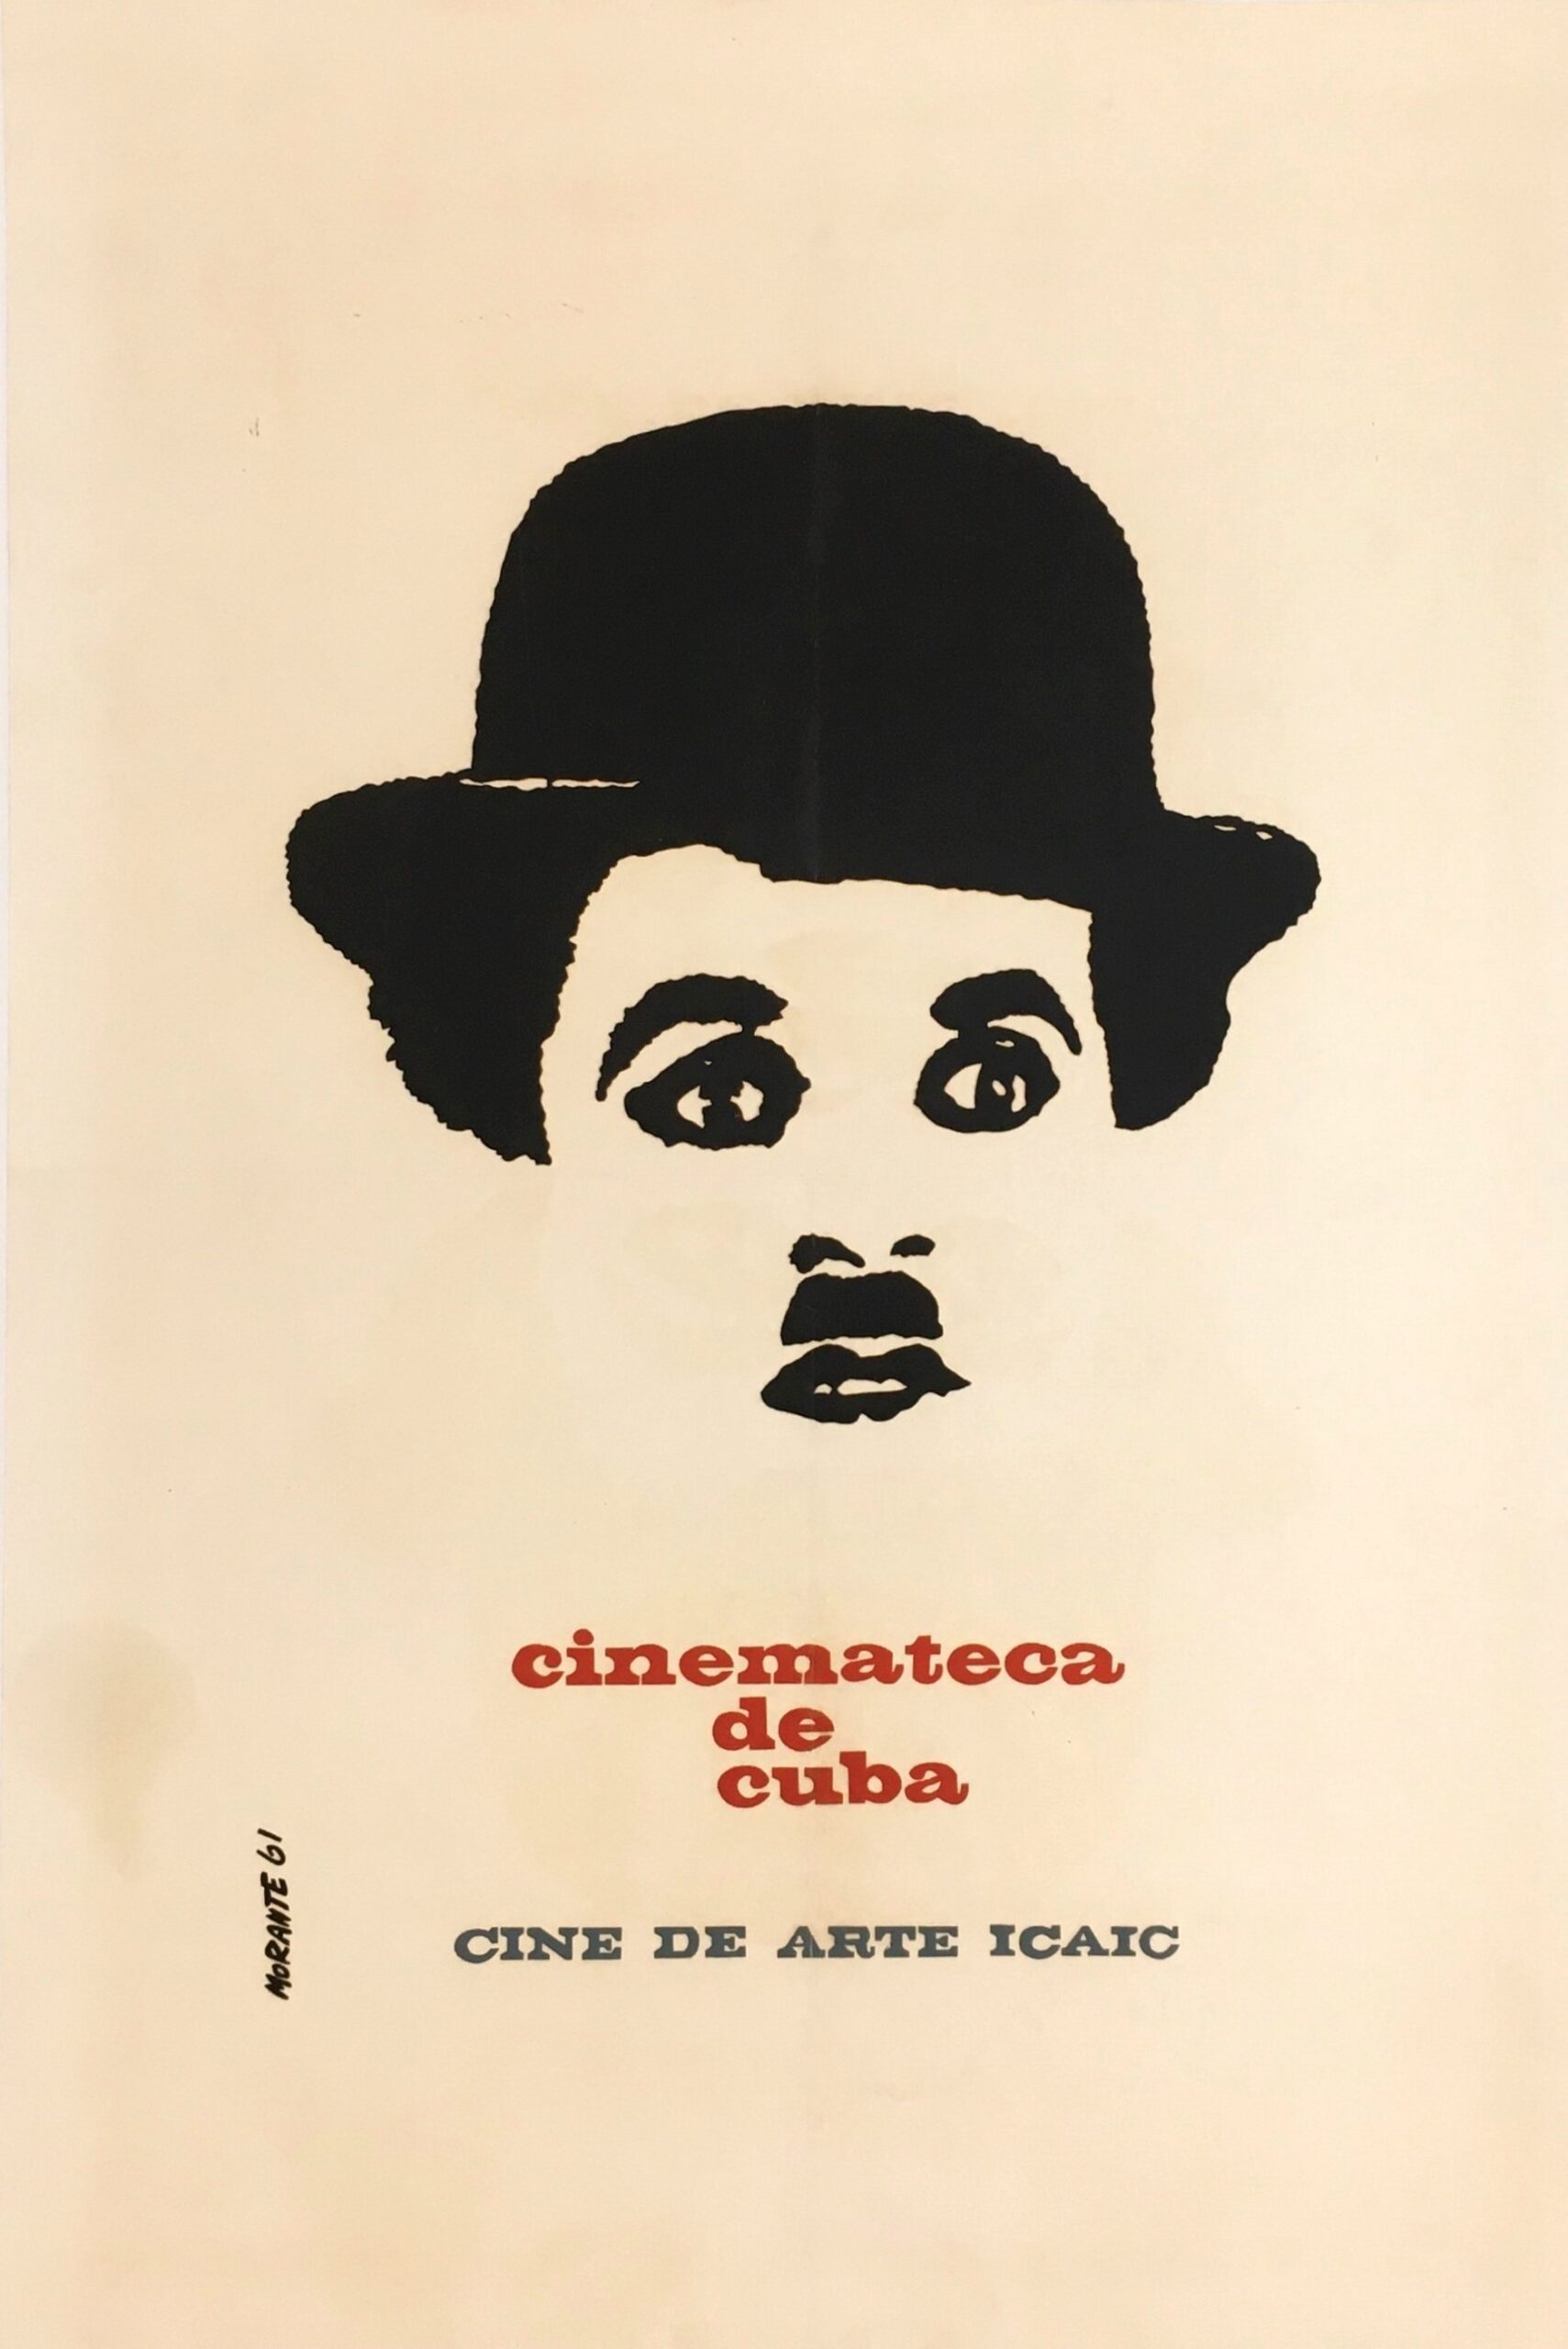 Original vintage poster for a Cuban poster celebrating Cuban cinema and art